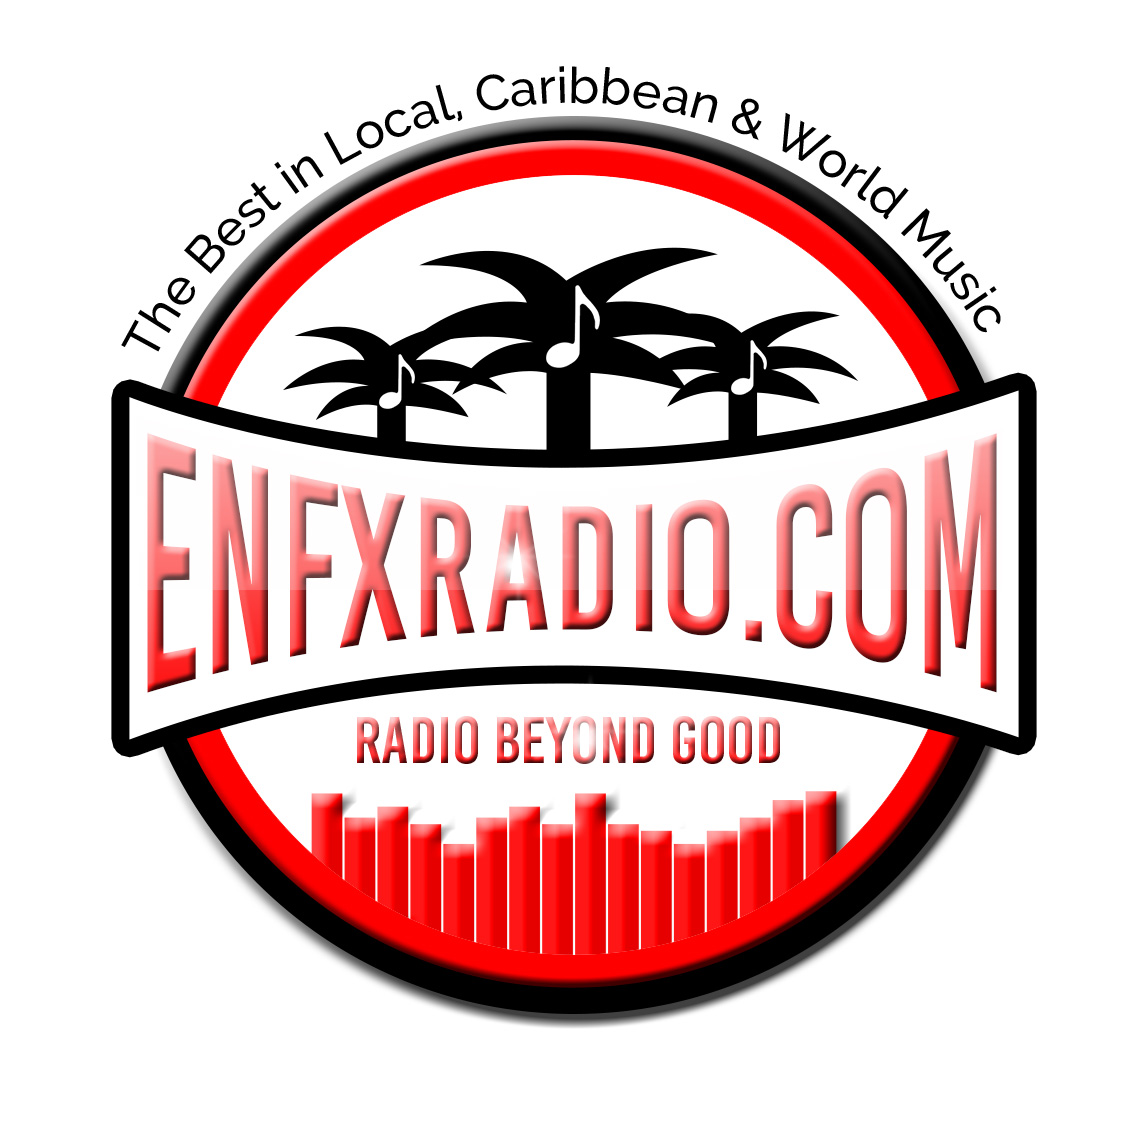 Enfx radio live